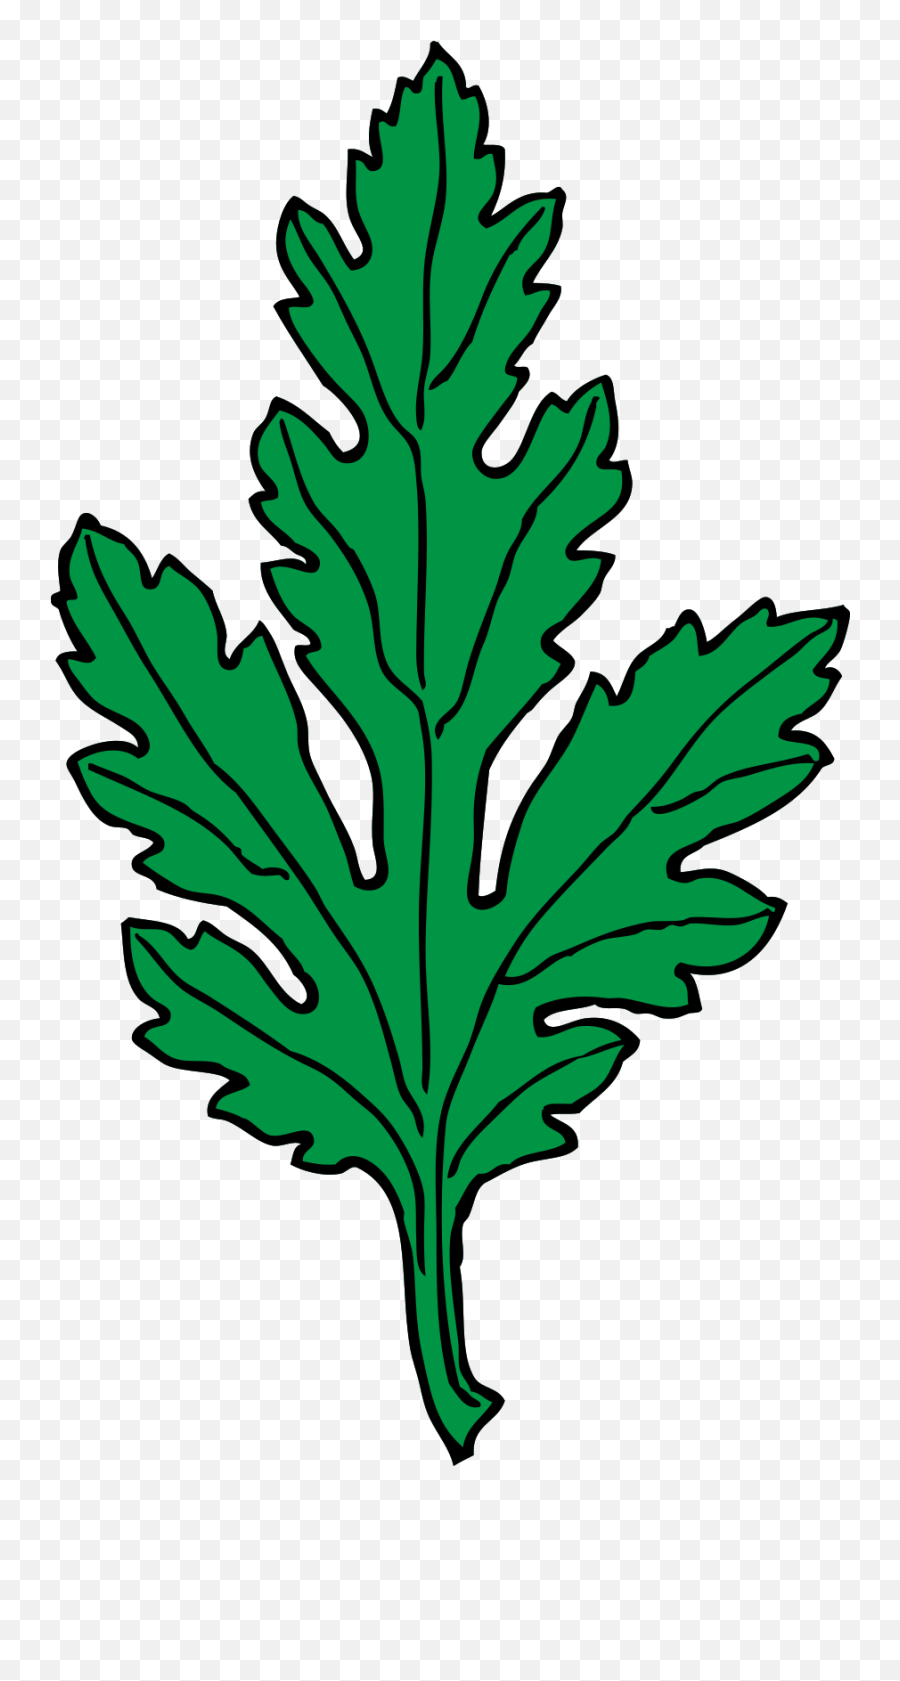 Ivy Leaf Green Chrysanthemum Clip Art At Clkercom - Vector Emoji,Herbs Clipart